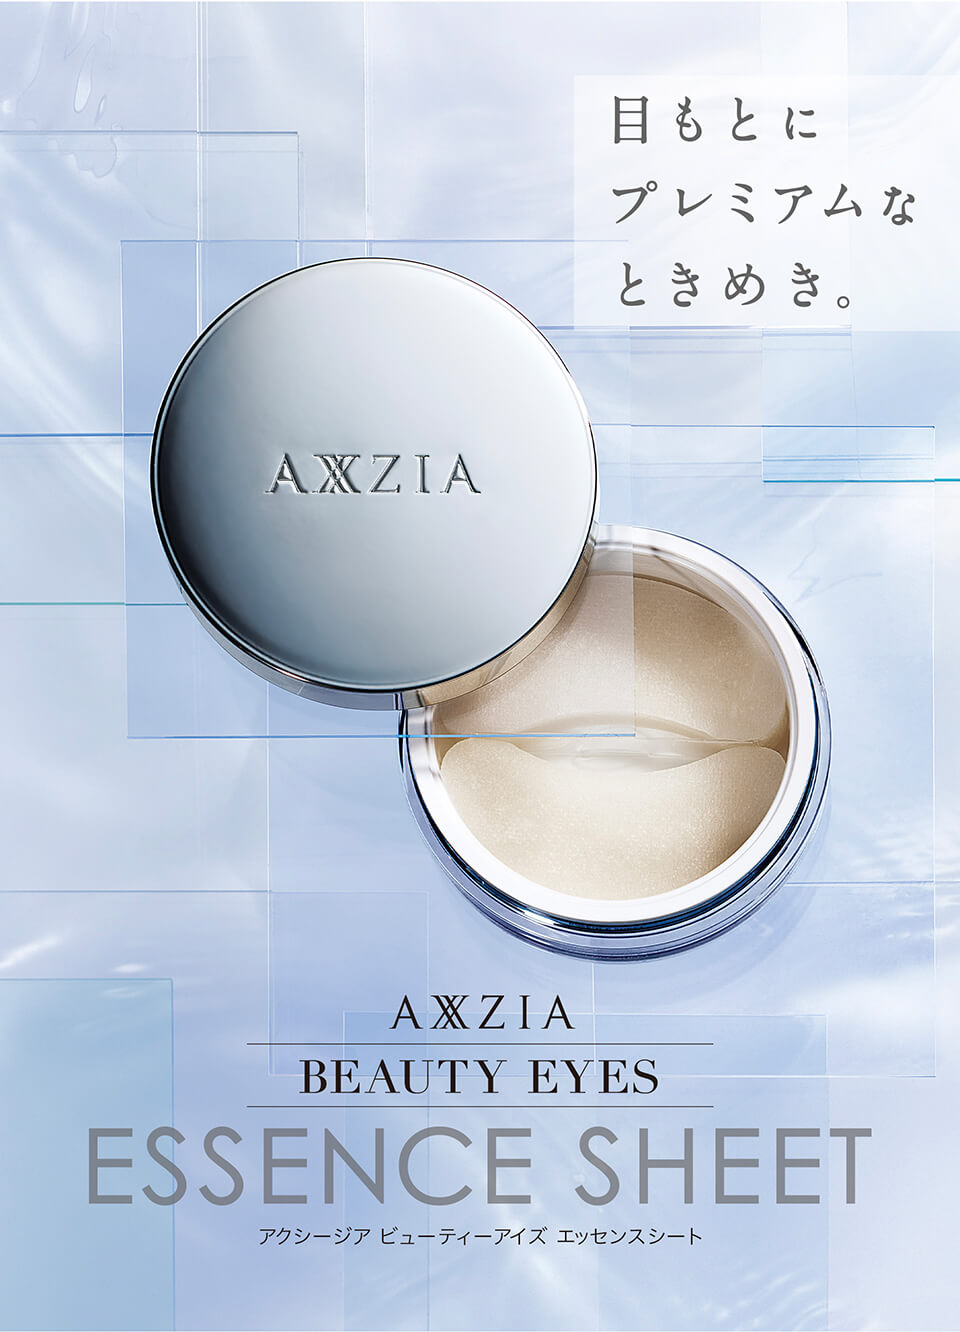 Axxzia Beauty Eyes Essence Sheet (60 Sheets)